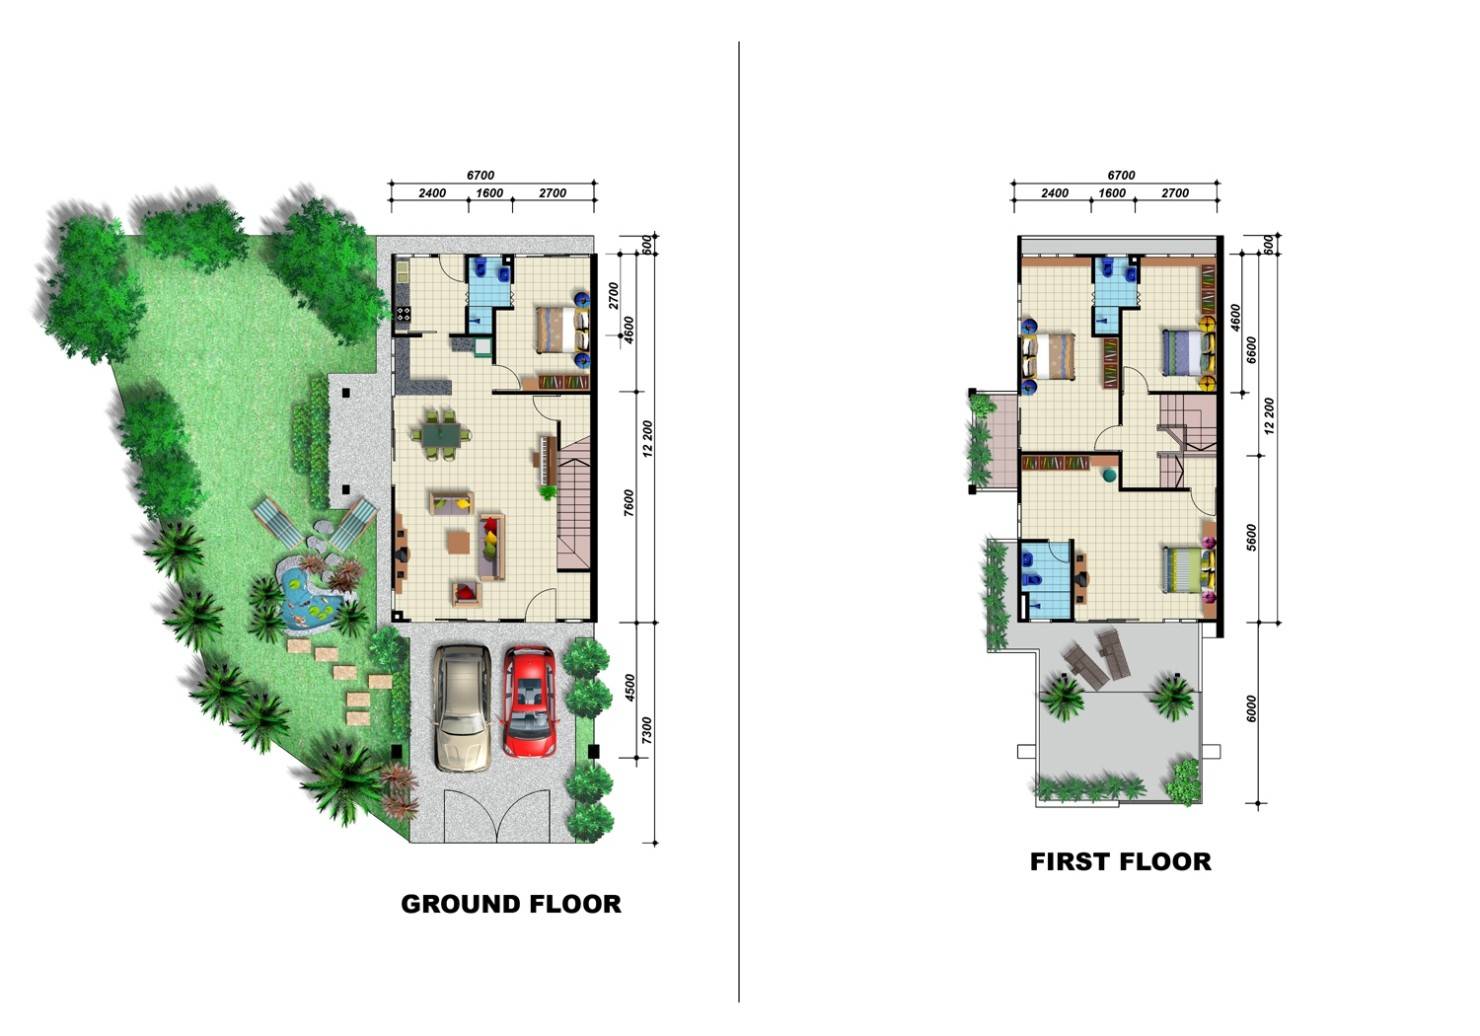 Terraced House Floor Plans Garden Plan Home Building